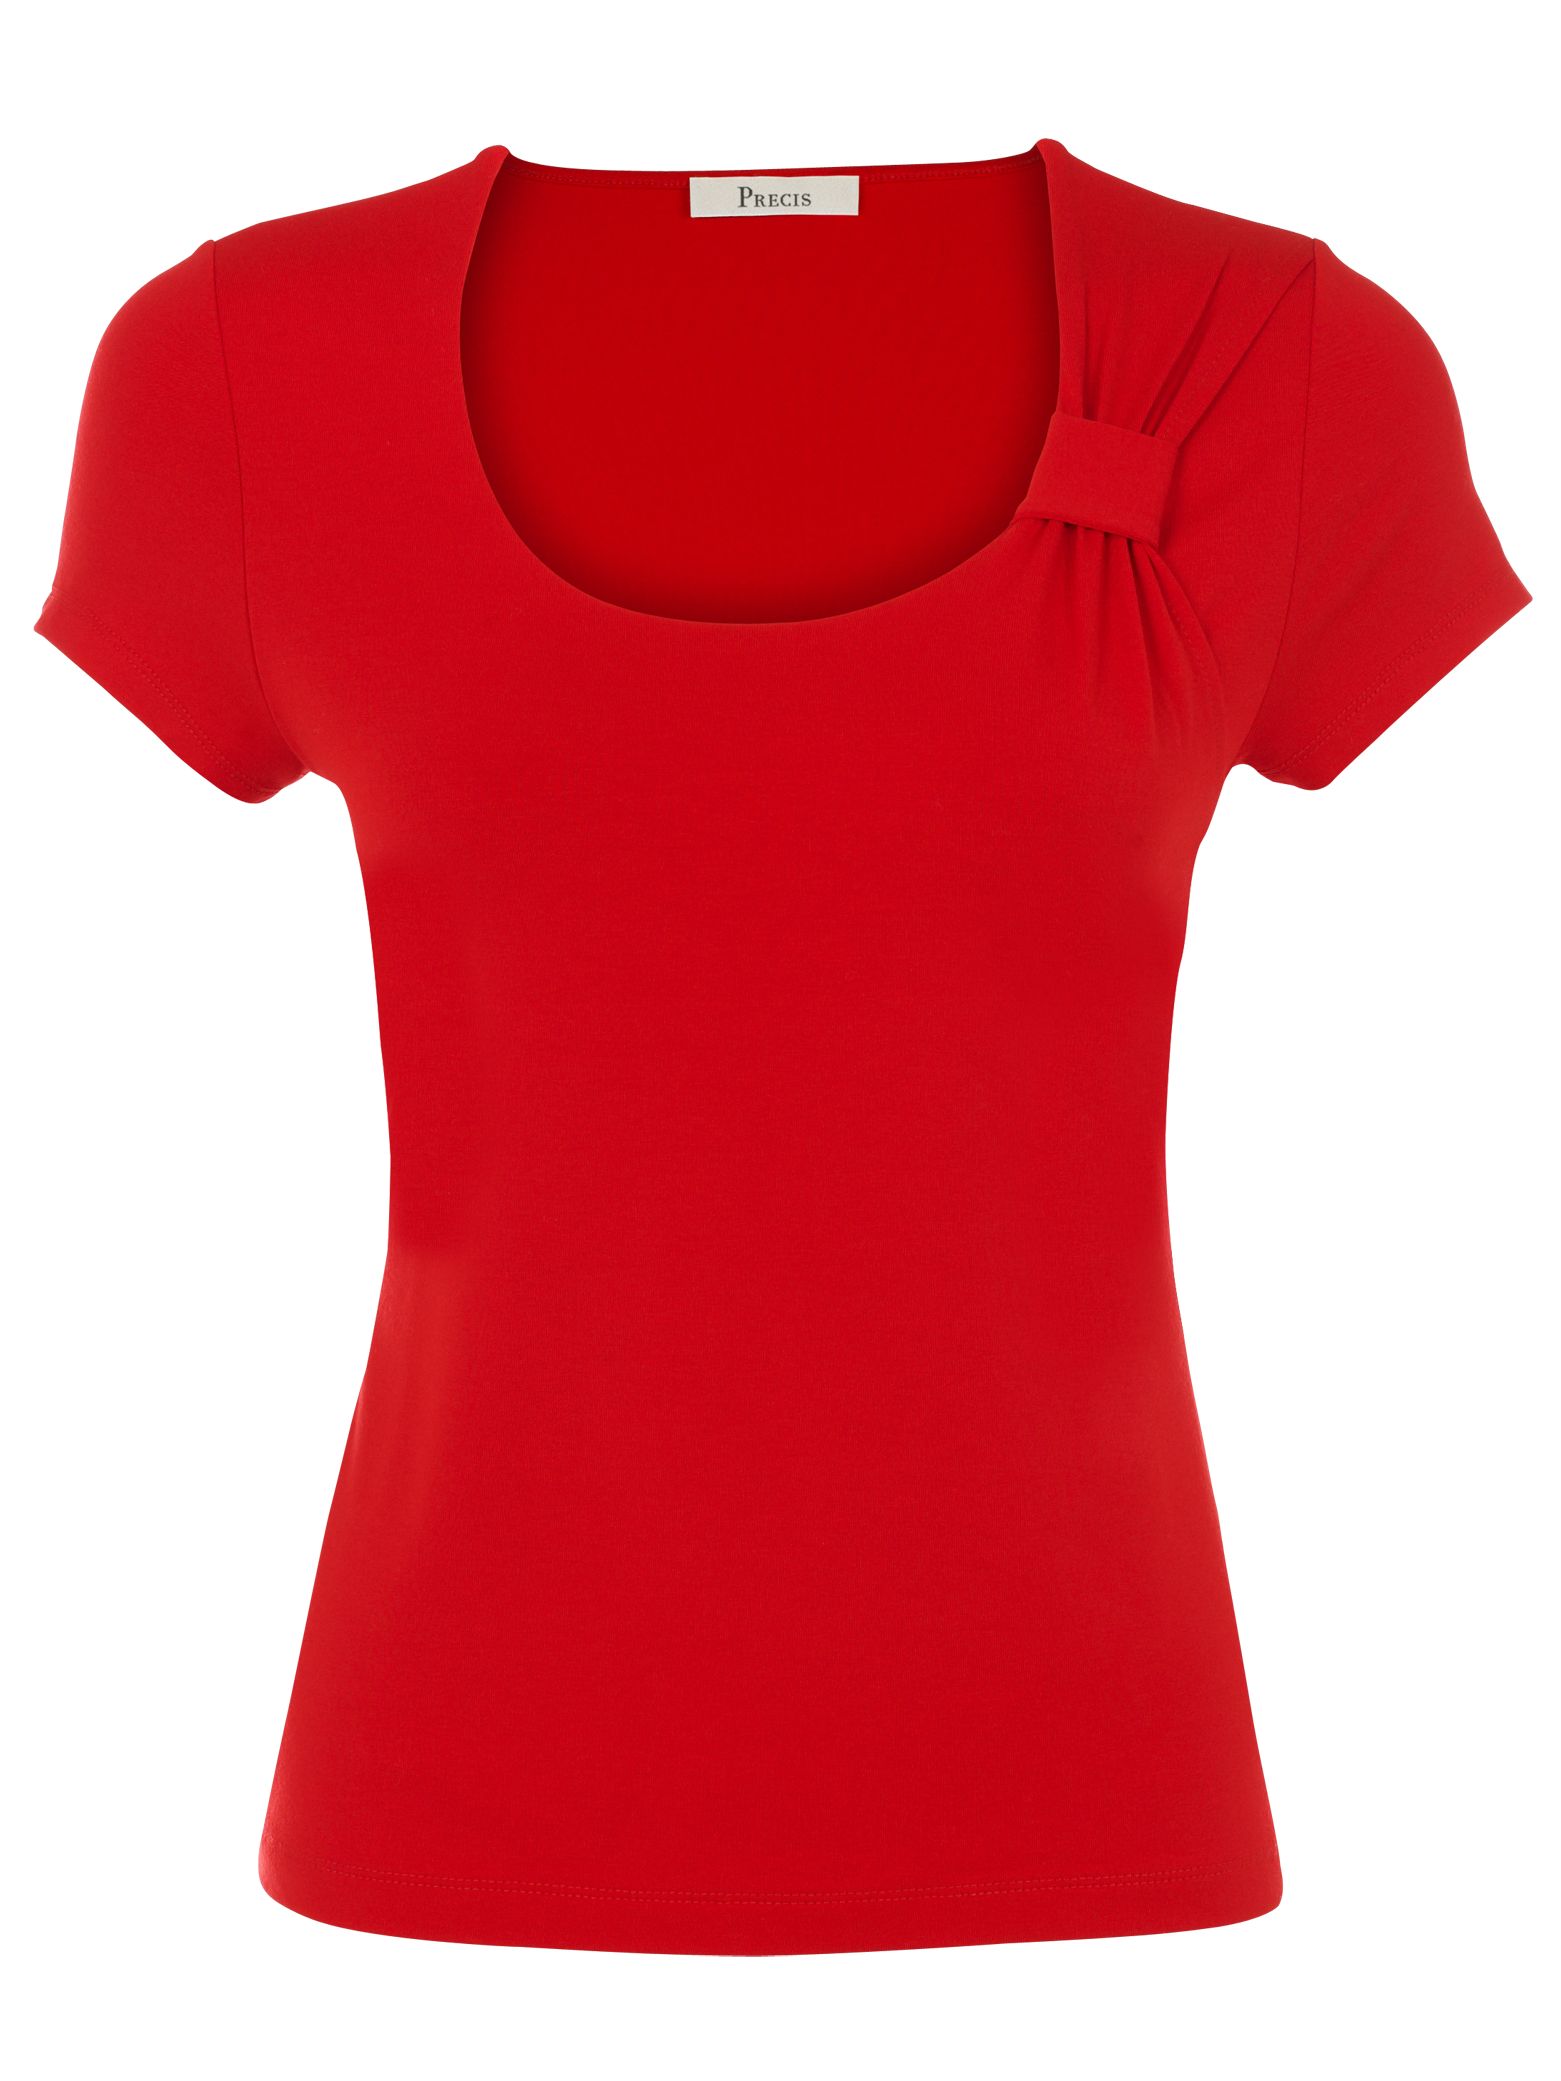 Precis Petite Bow Jersey T-Shirt, Red